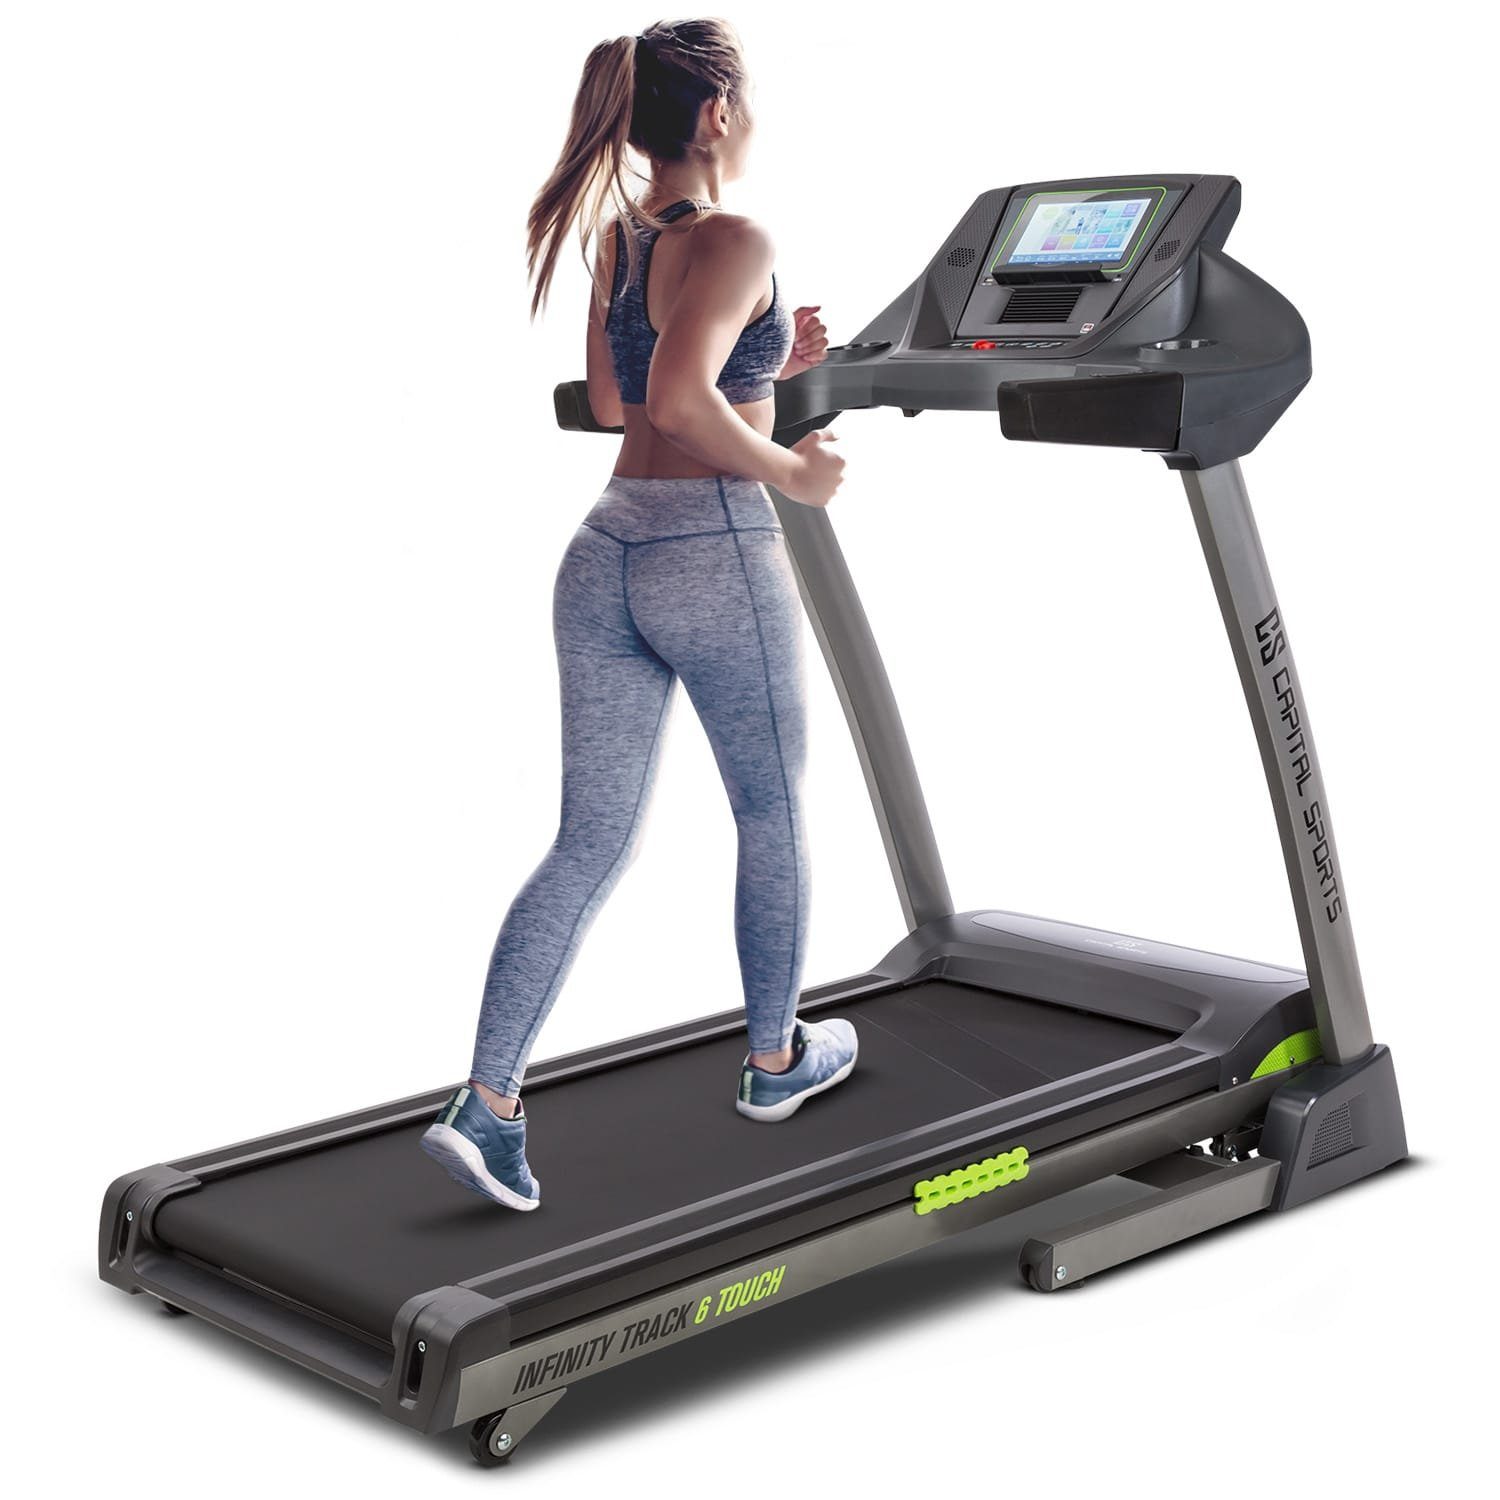 Laufbahn Treadmill Programme Capital Track 36 mit Infinity Sports klappbar Pulssensor 6.0, Bodenrollen Laufband